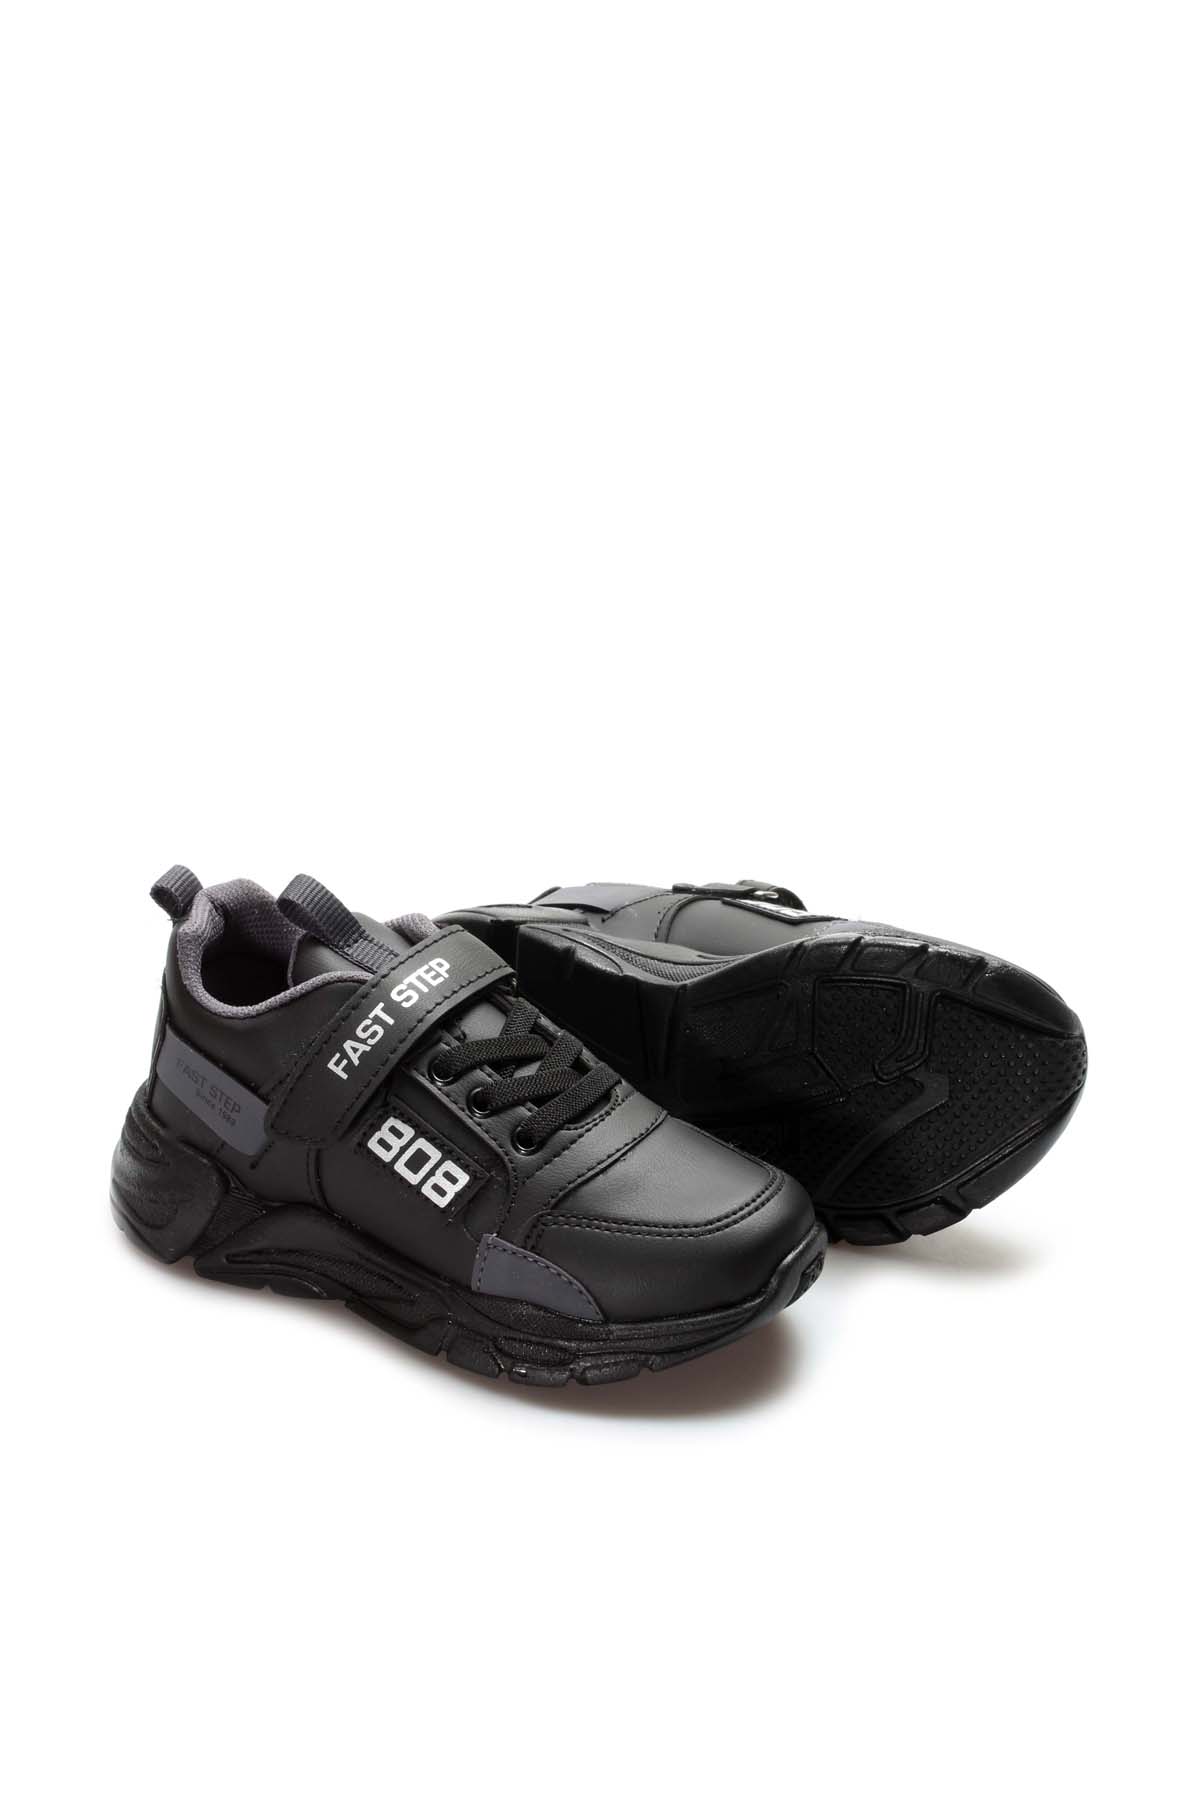 Fast Step Kids Unisex Boys Sport Shoes Black Gray 868XCA808